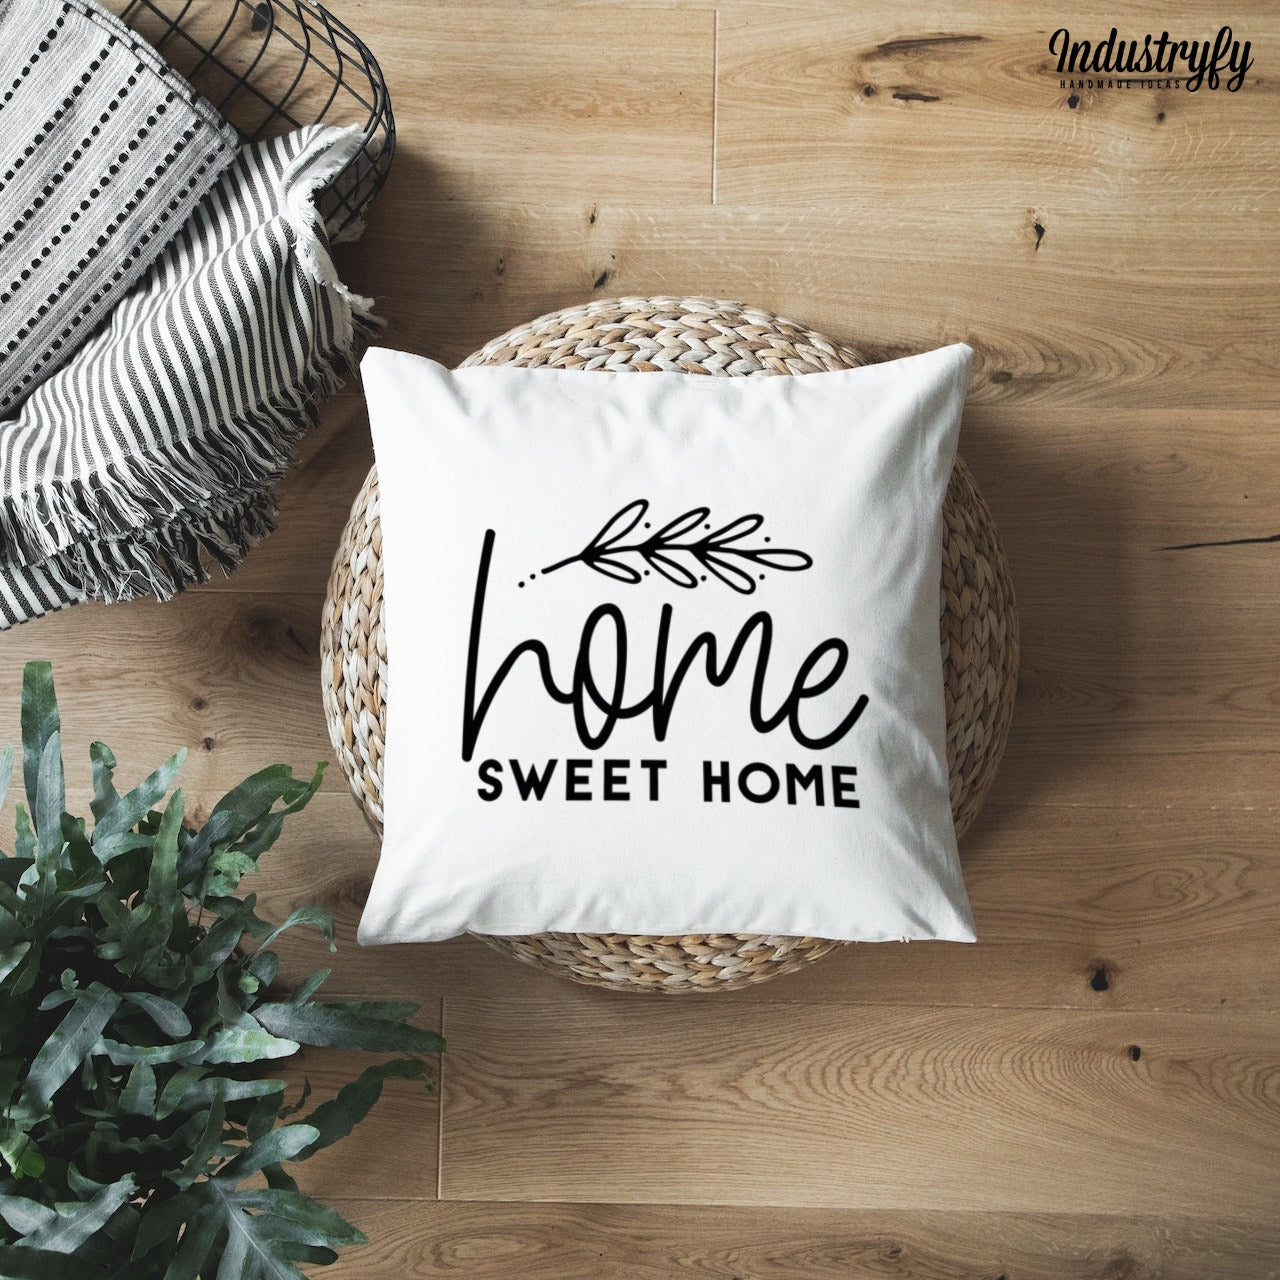 Kissenhülle | Home sweet home – Industryfy